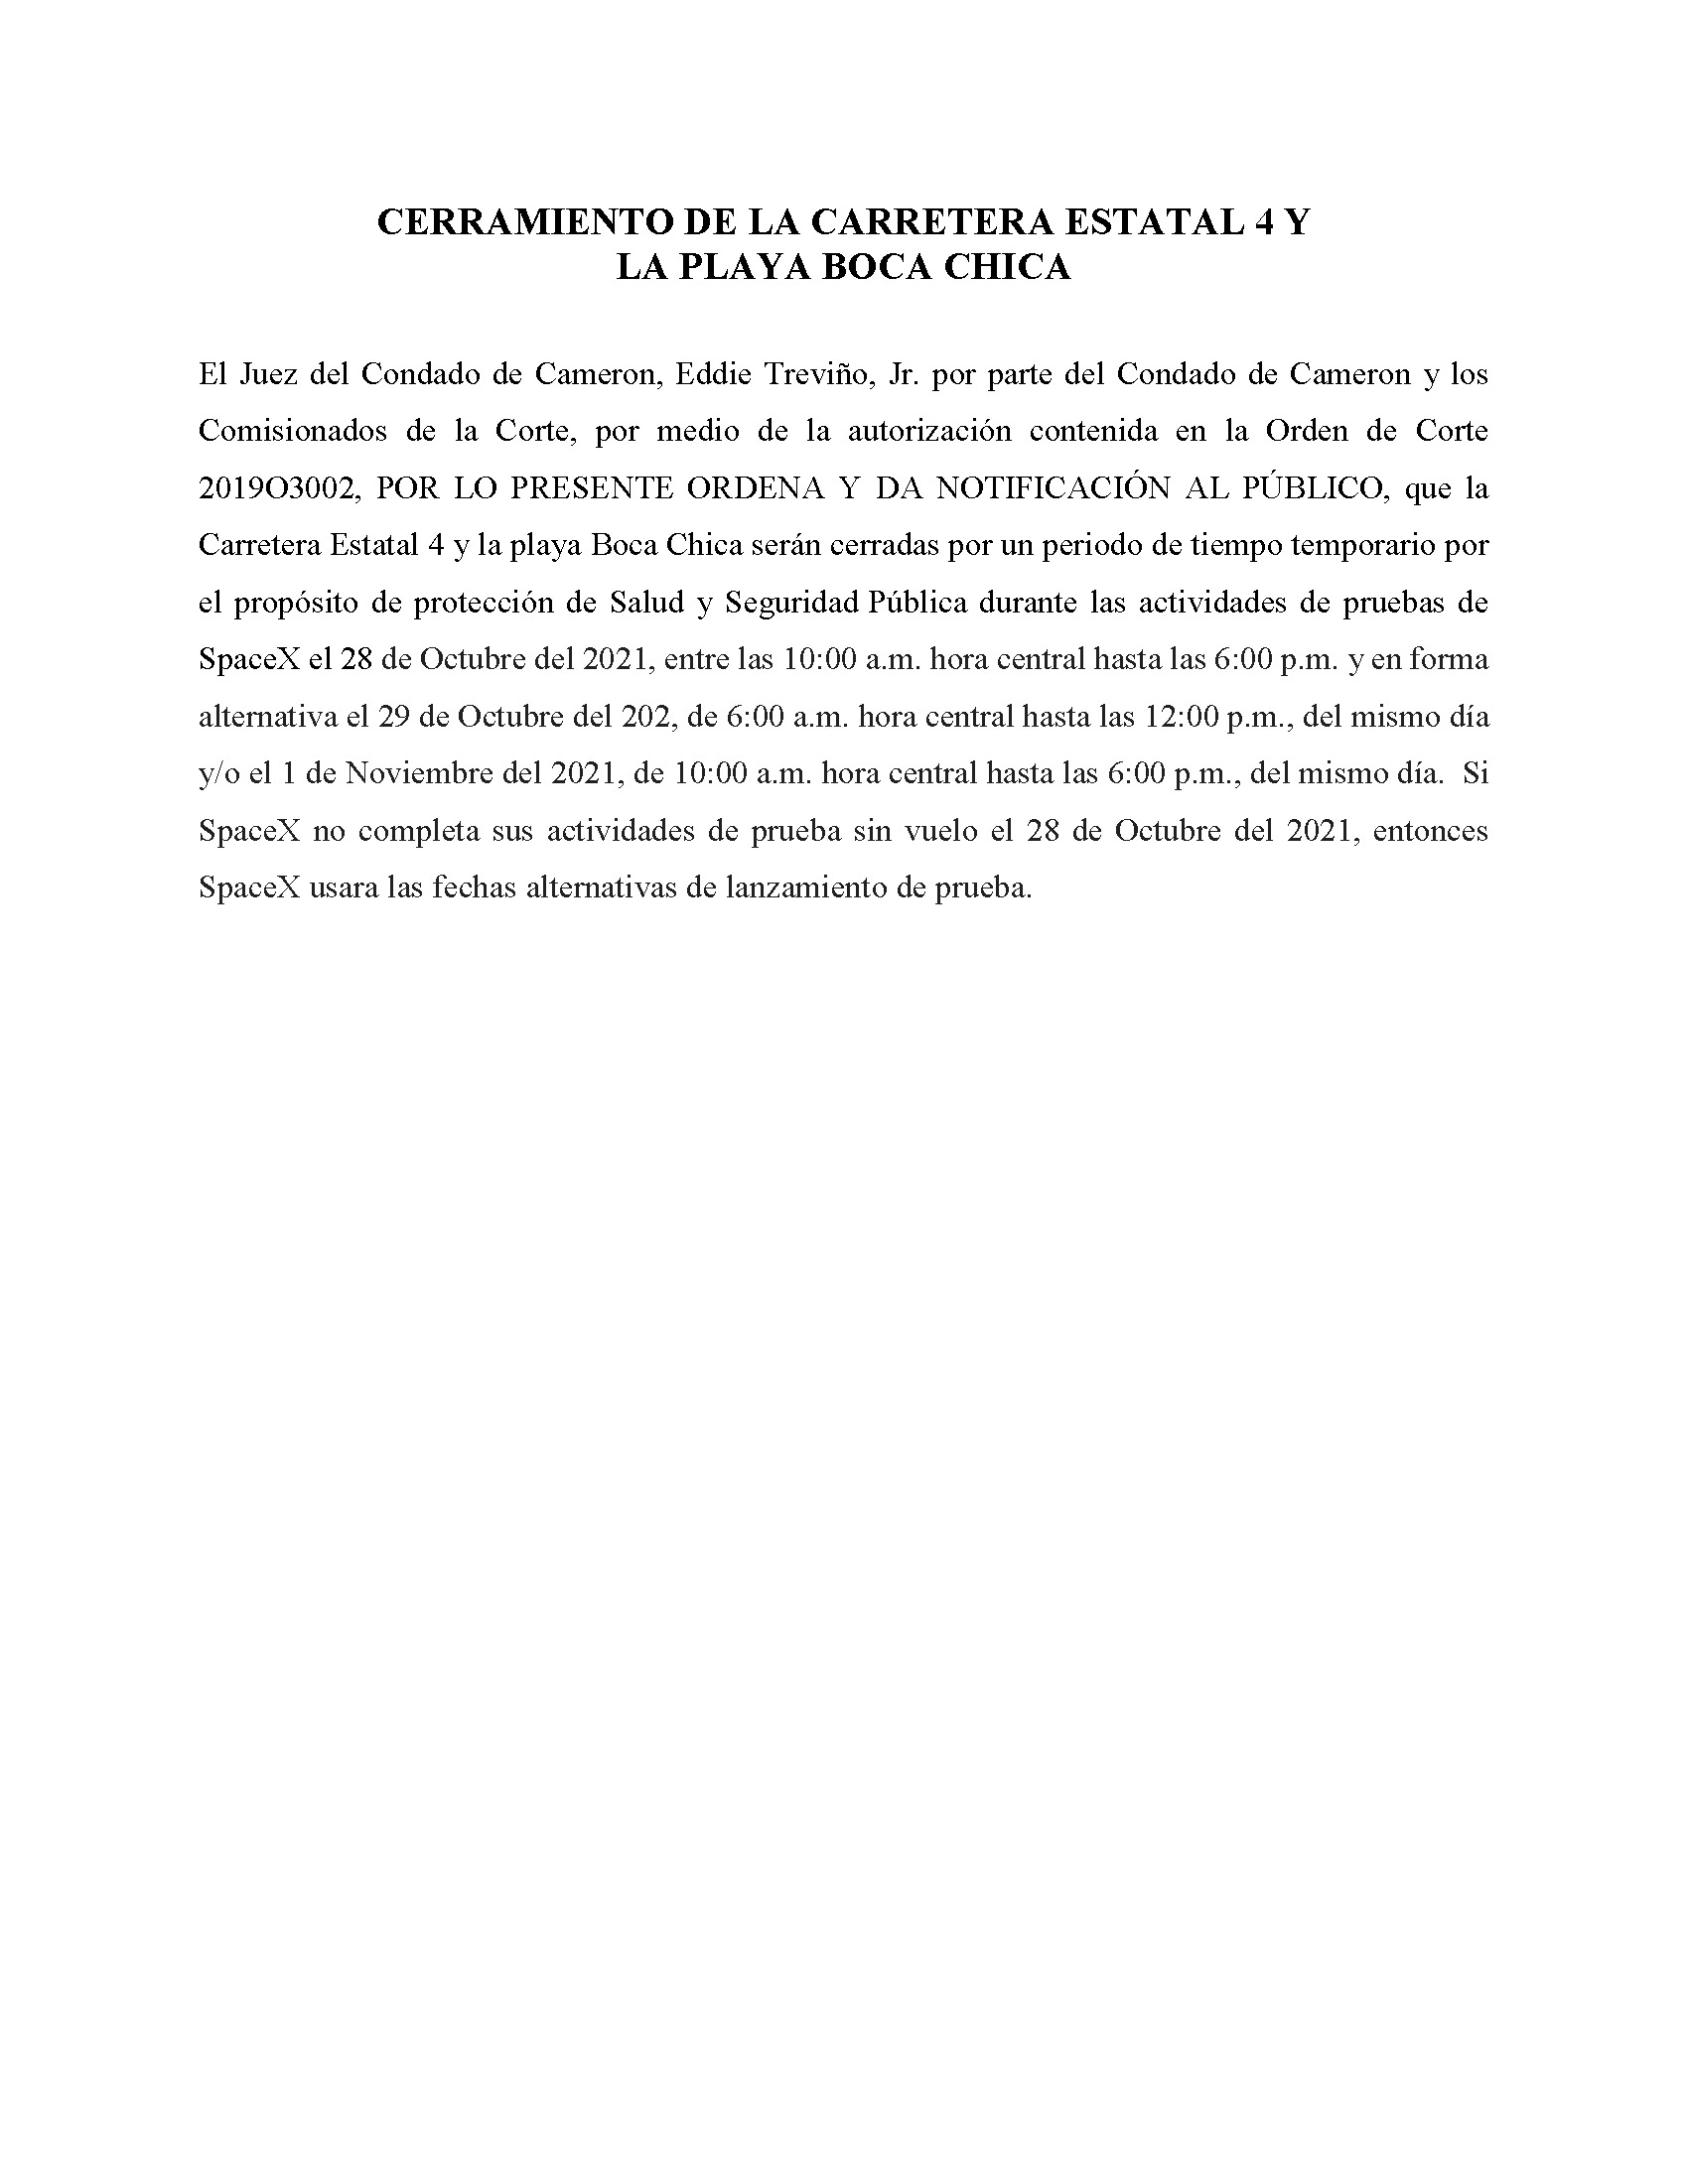 ORDER.CLOSURE OF HIGHWAY 4 Y LA PLAYA BOCA CHICA.SPANISH.10.28.2021